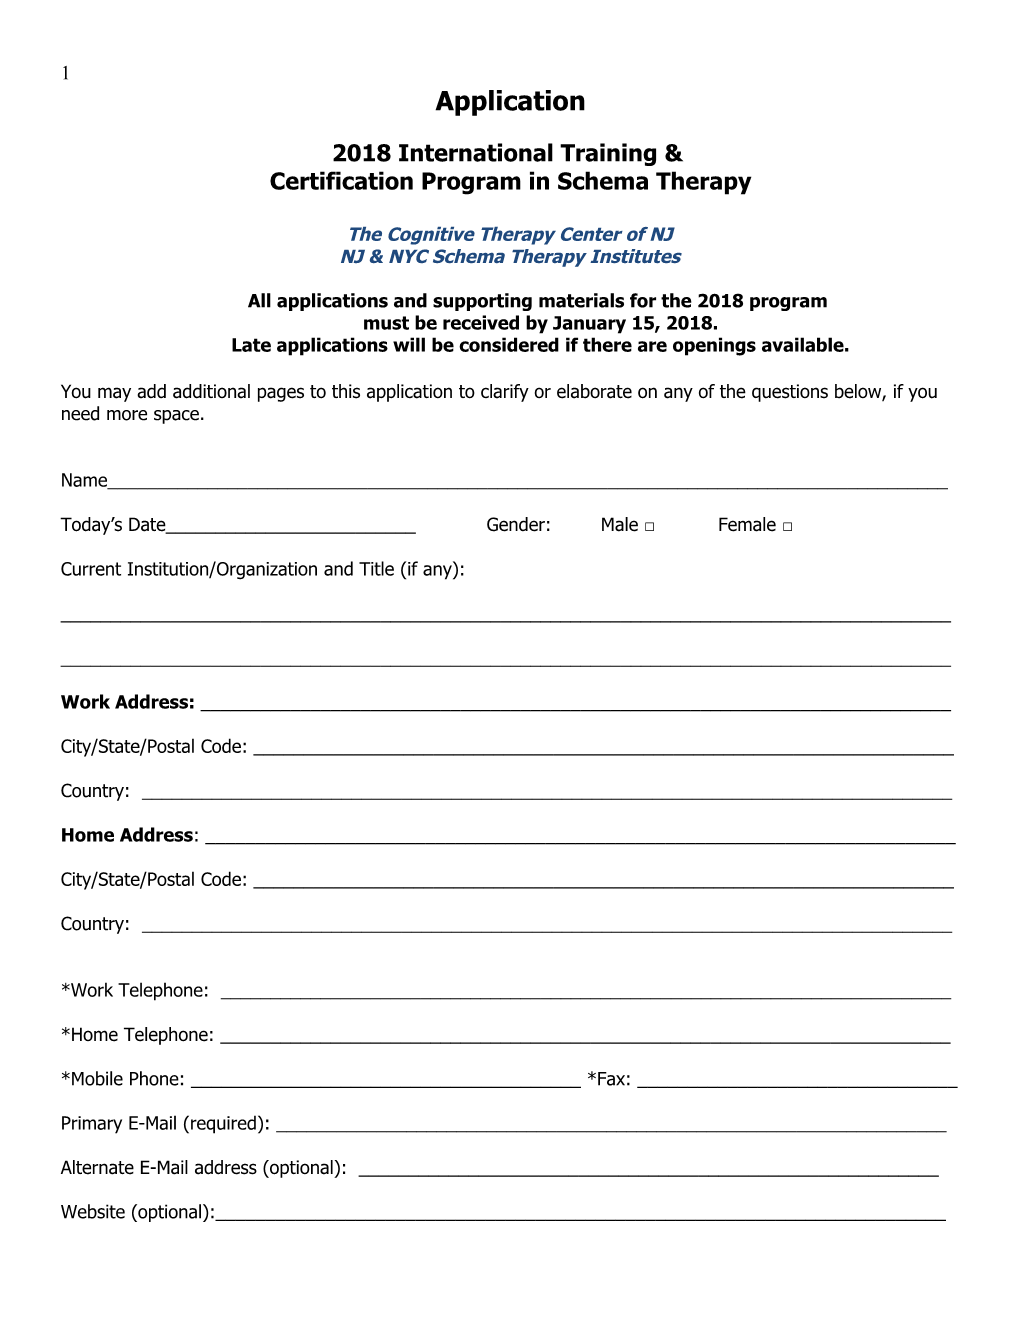 Certification Program in Schema Therapy